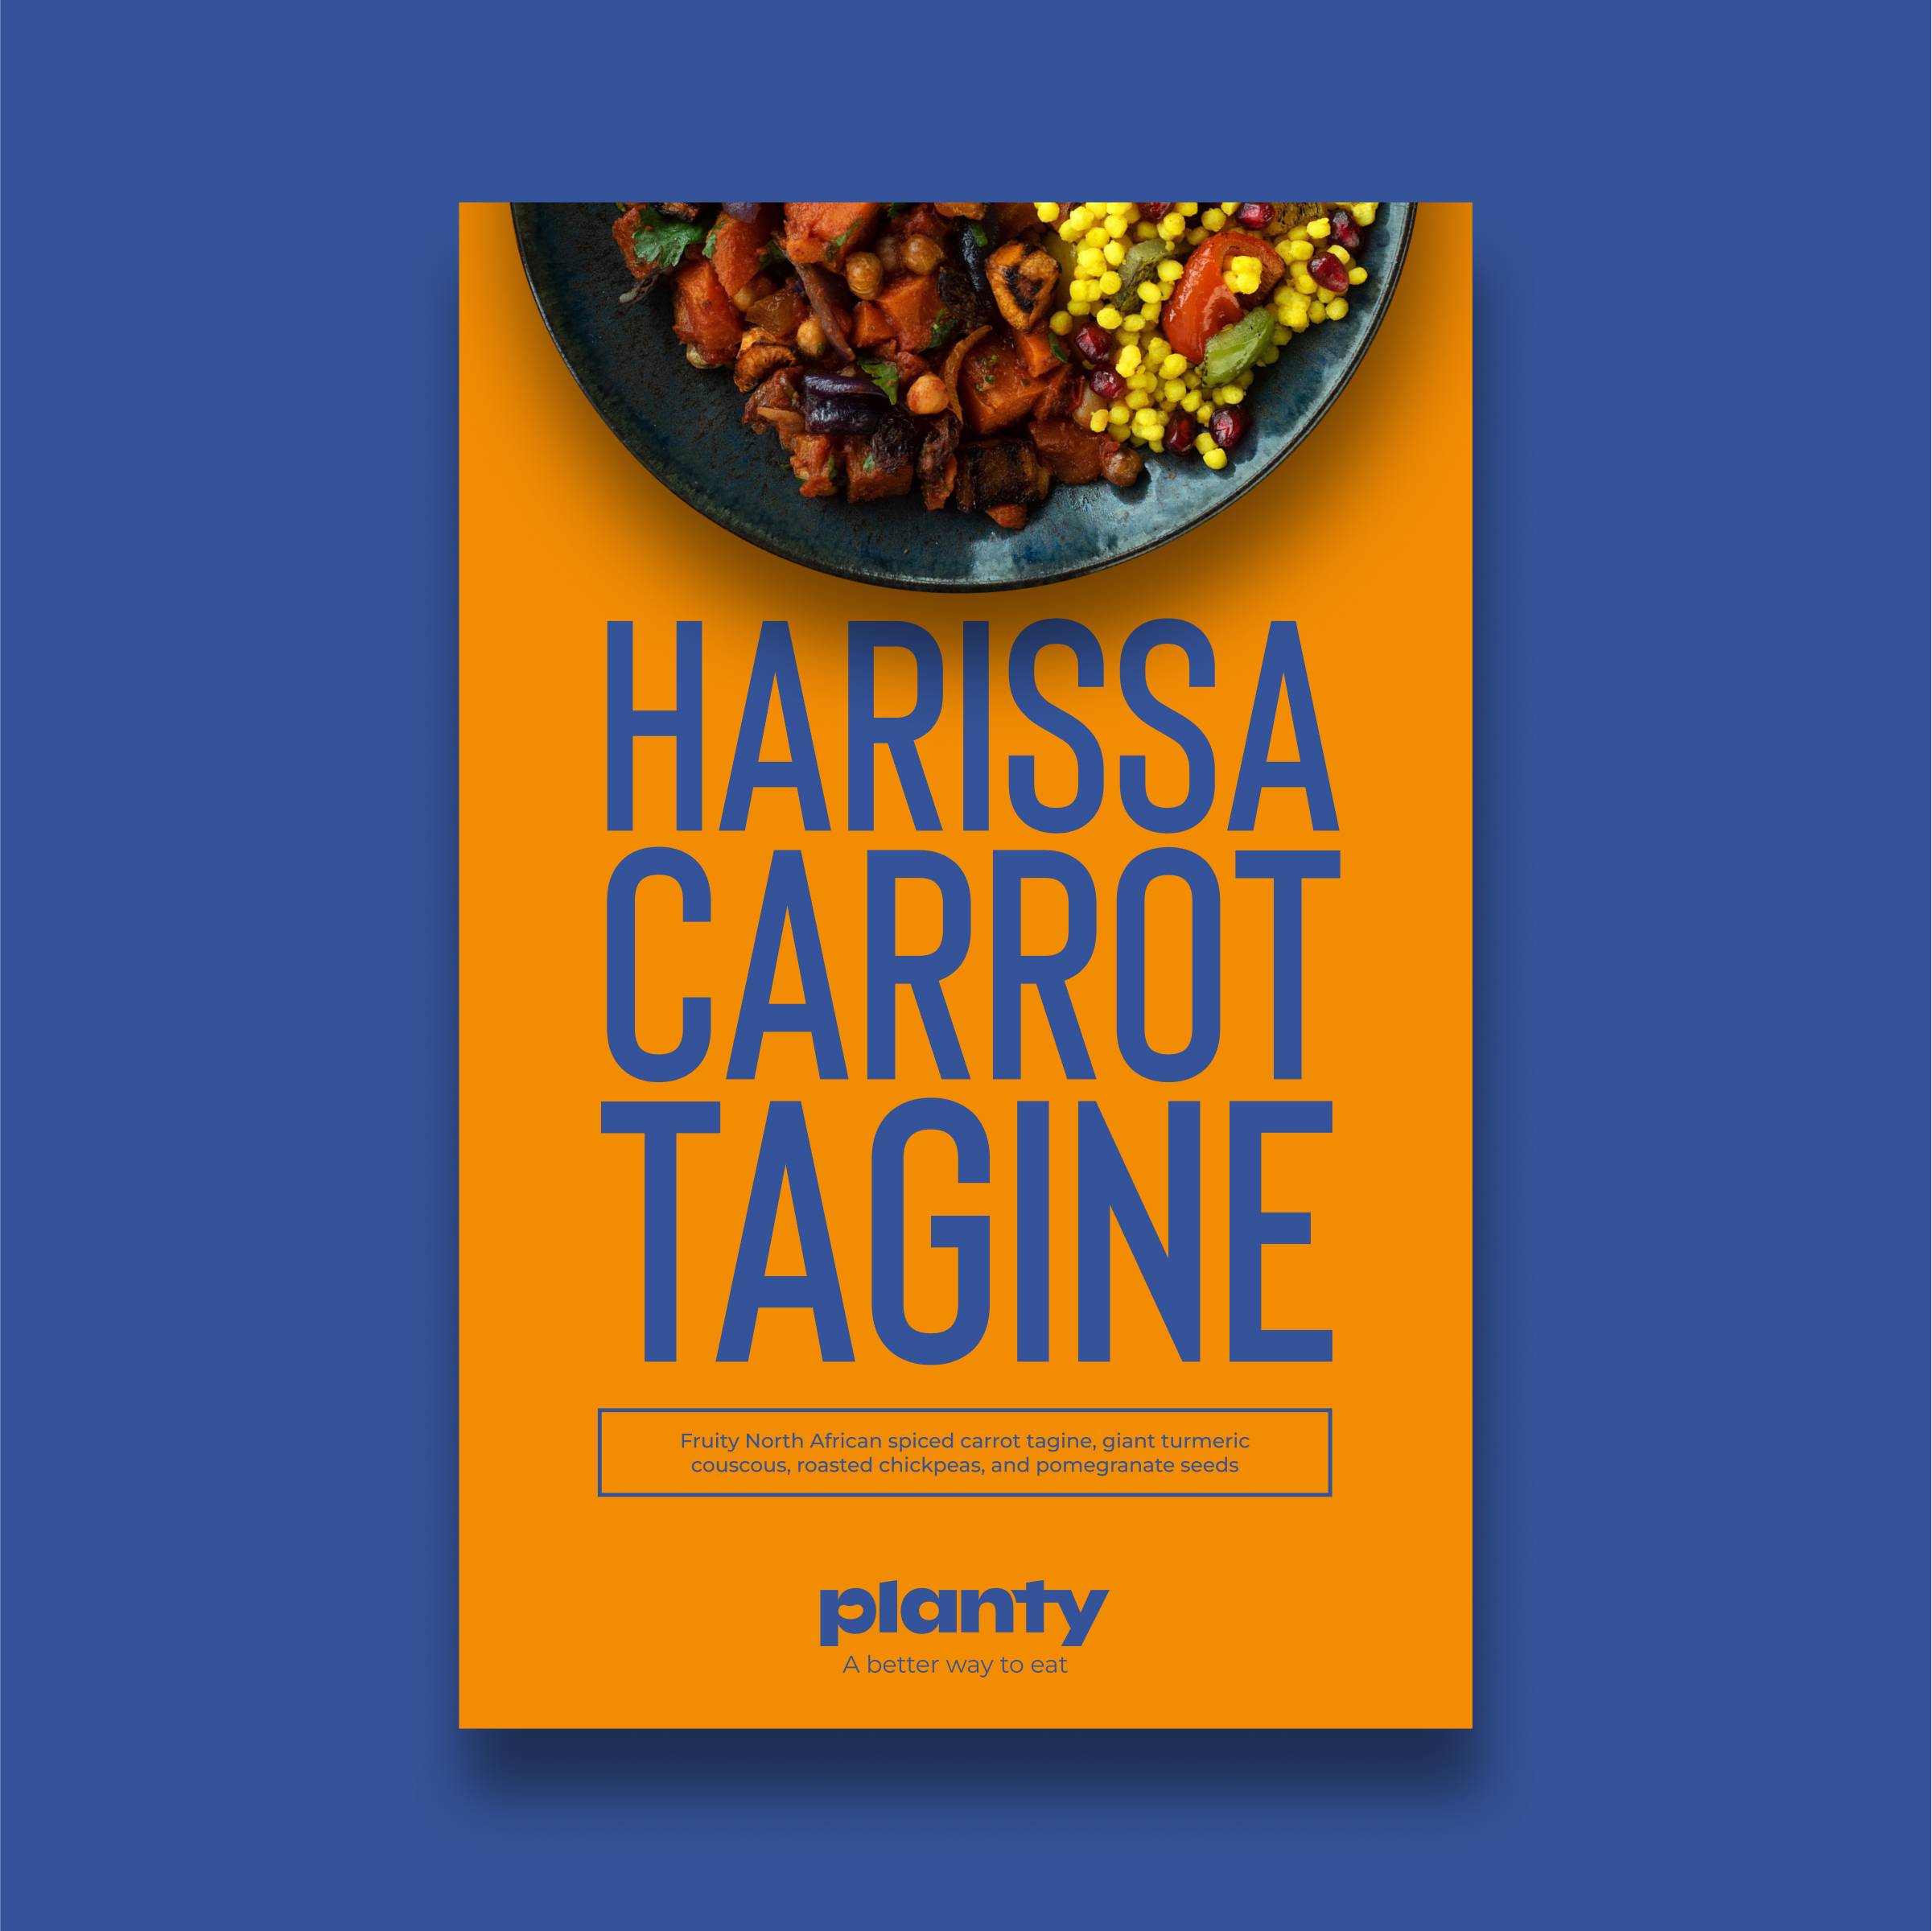 Harissa Carrot Tagine image 2